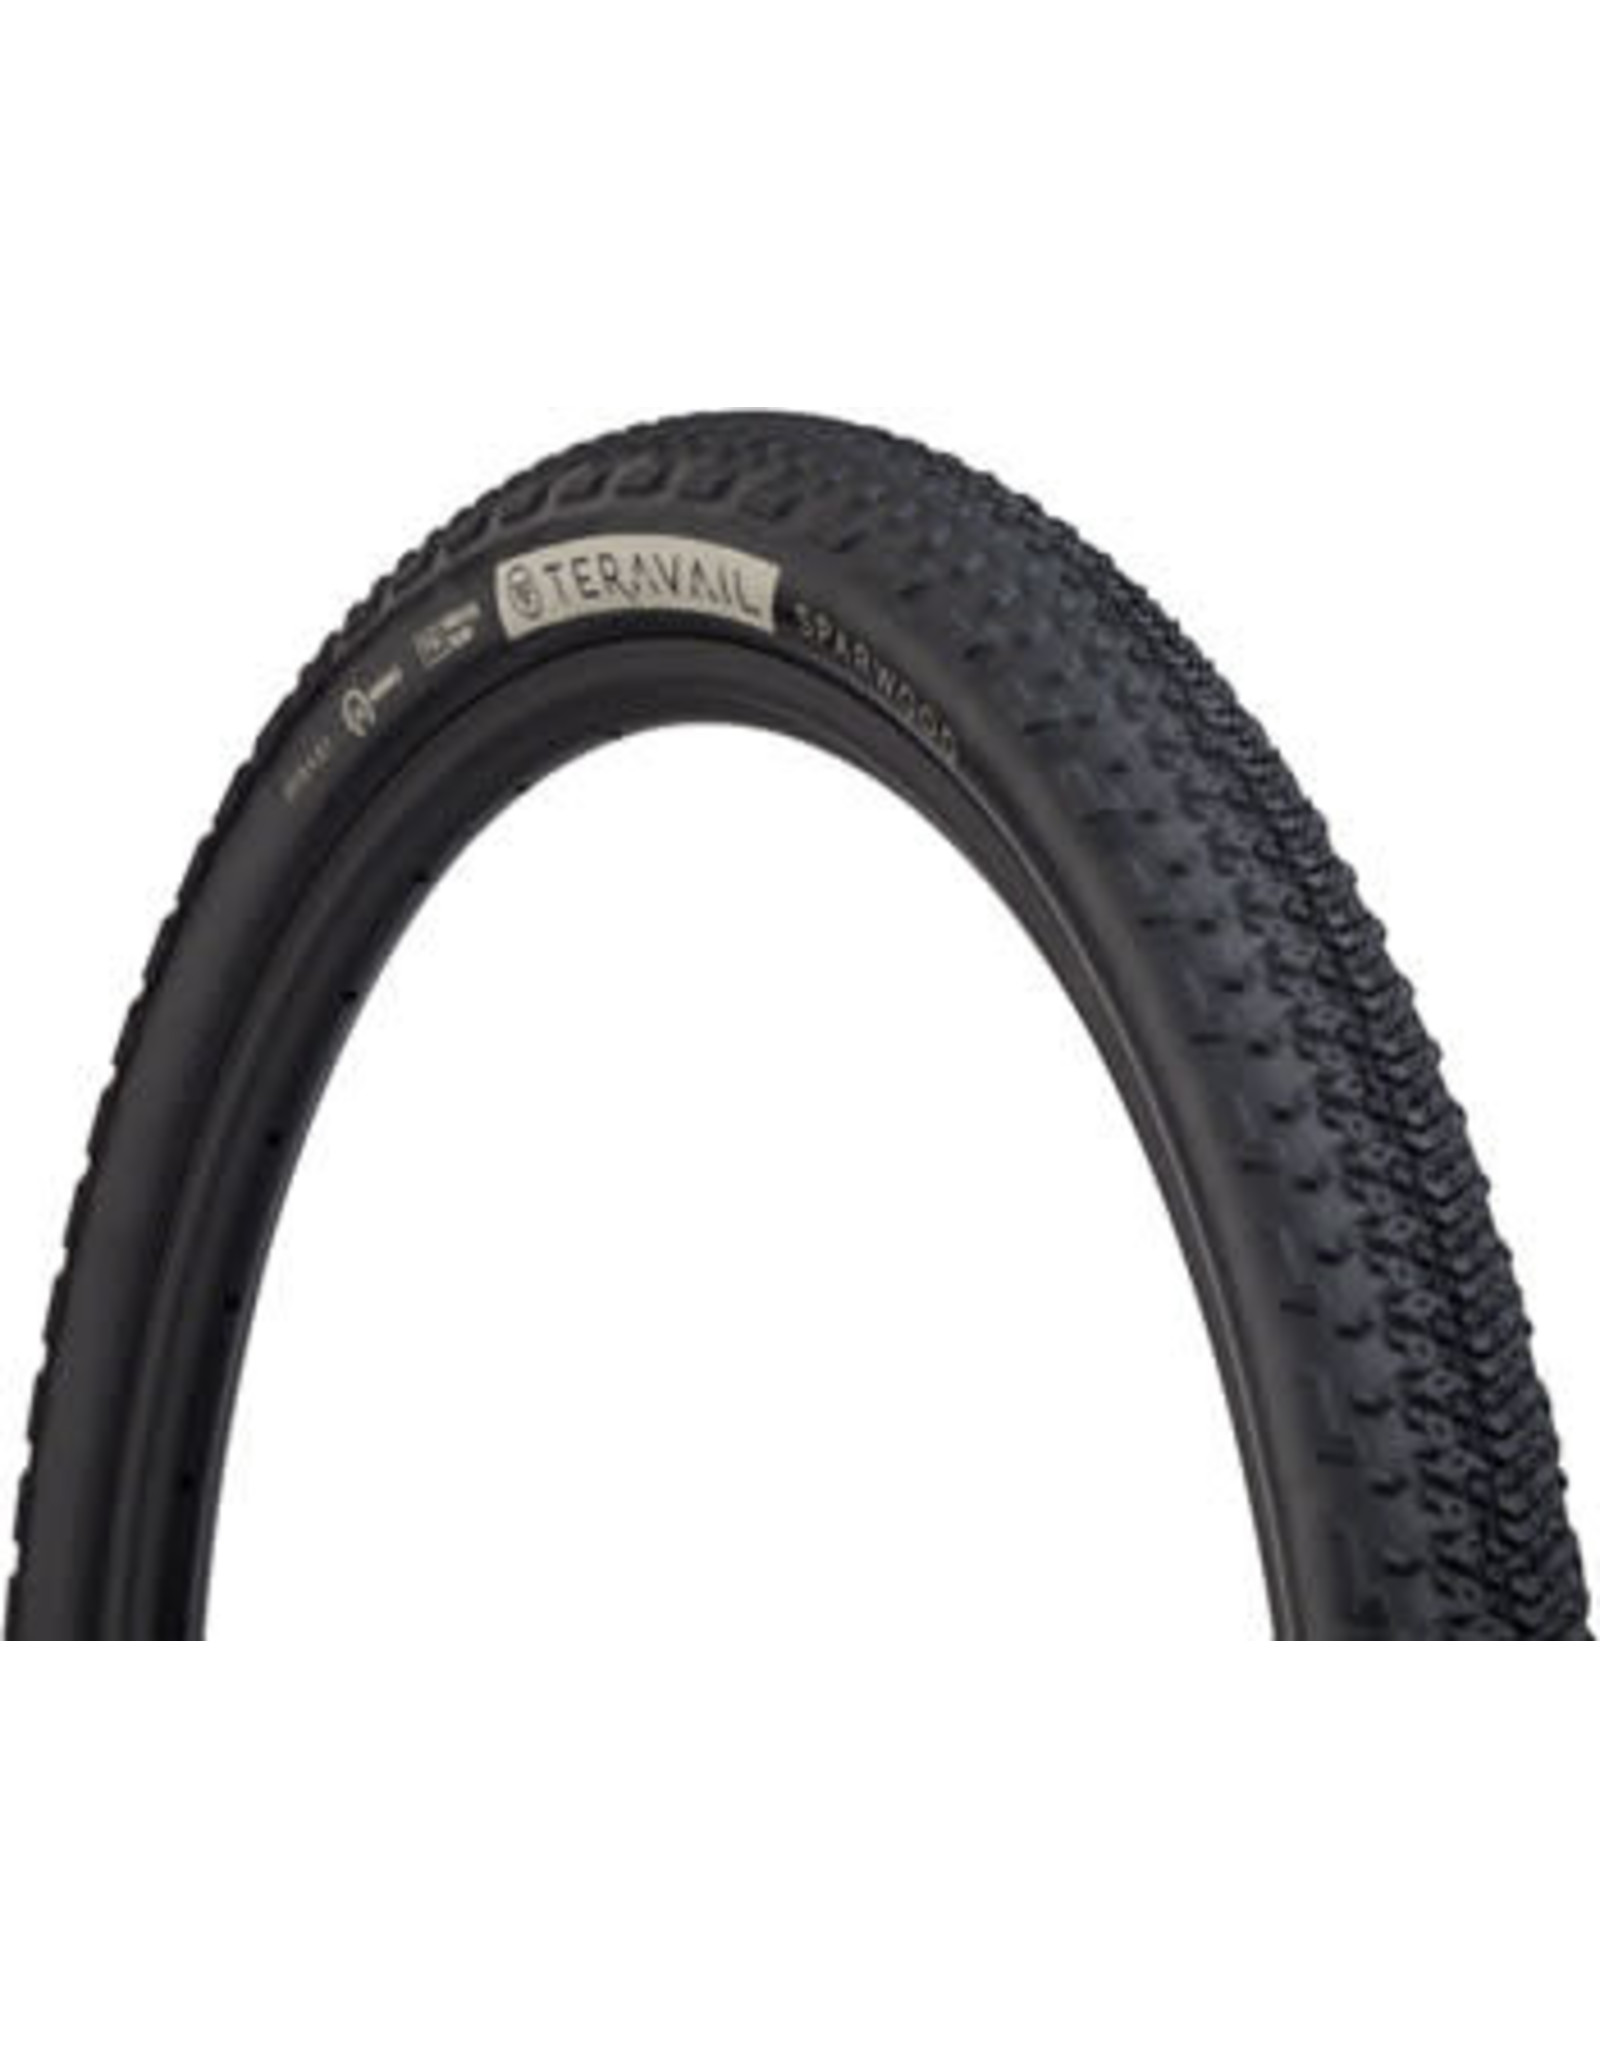 Teravail Teravail Sparwood Tire - 27.5 x 2.1, Tubeless, Folding, Black, Durable